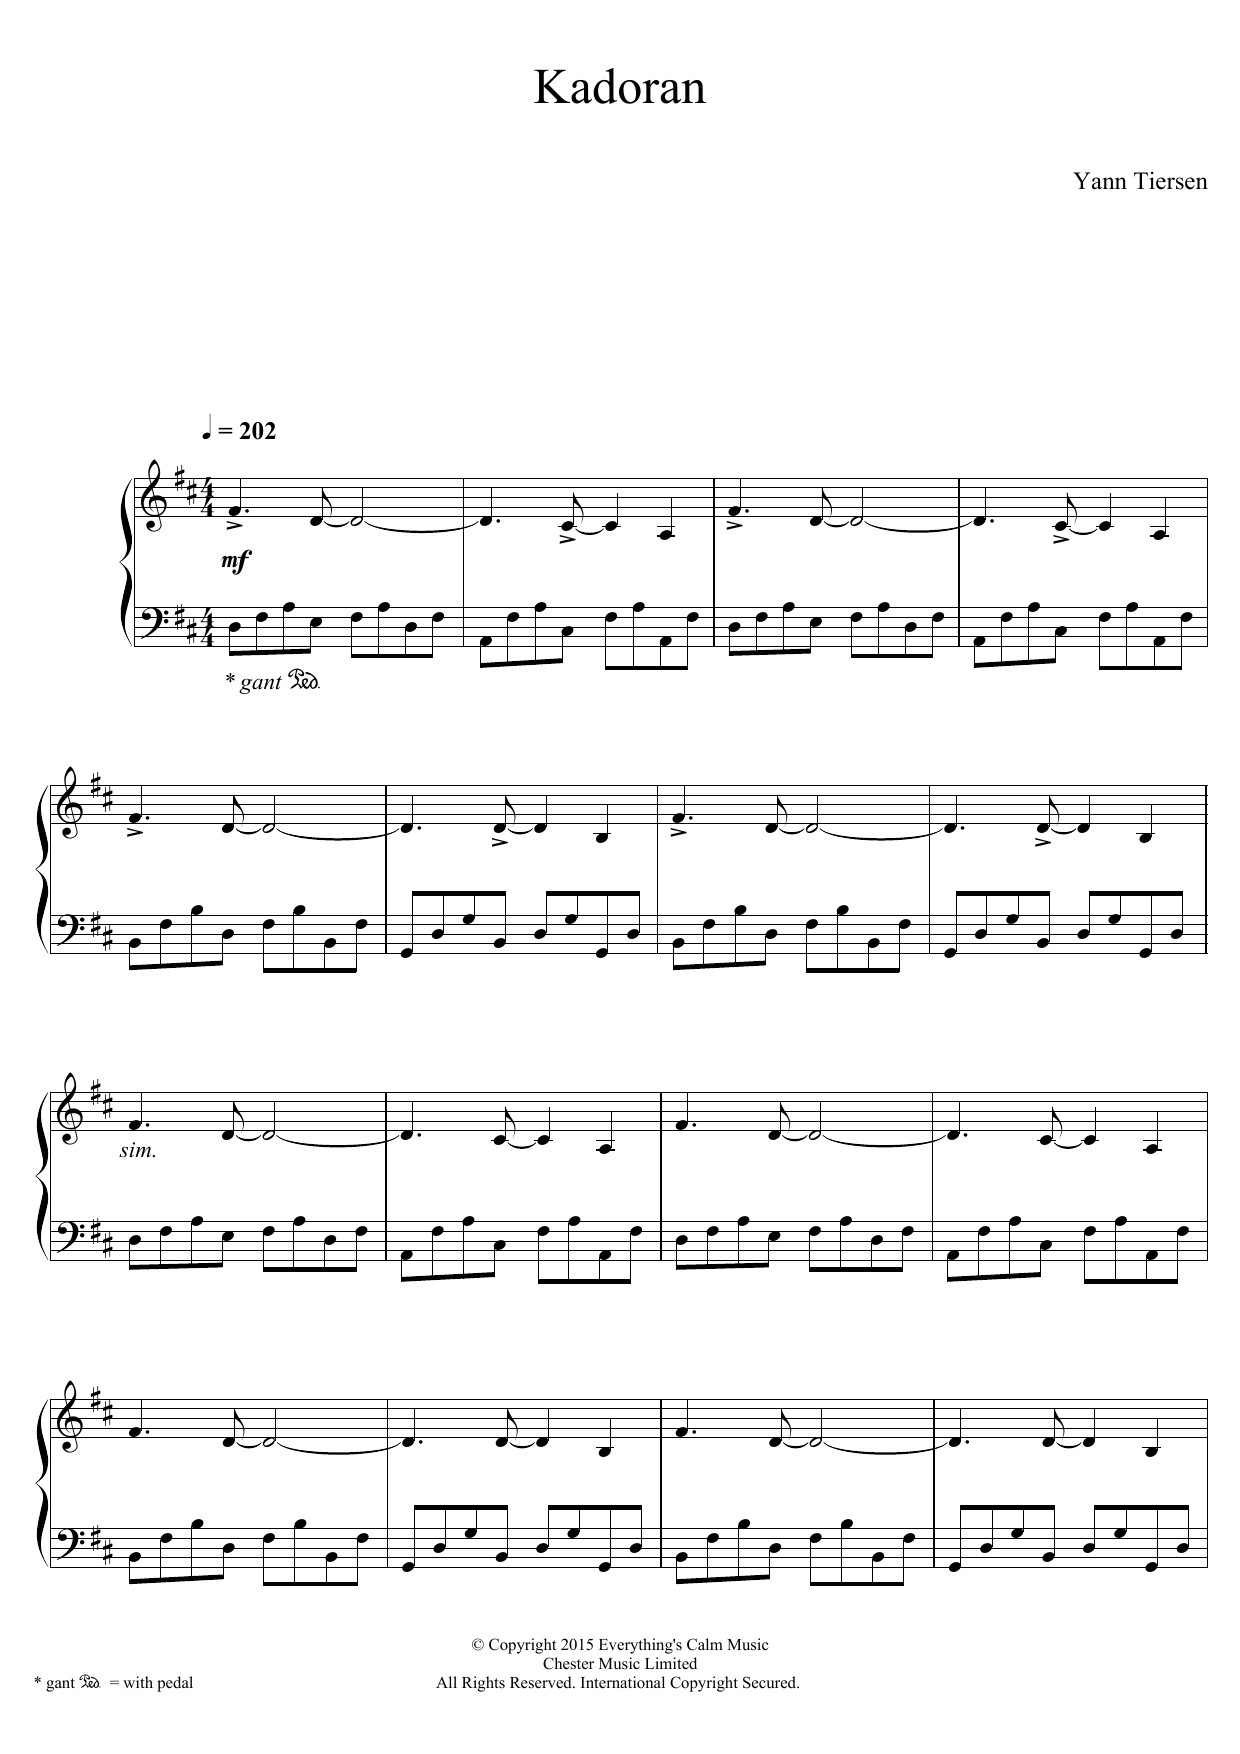 Download Yann Tiersen Kadoran Sheet Music and learn how to play Piano PDF digital score in minutes